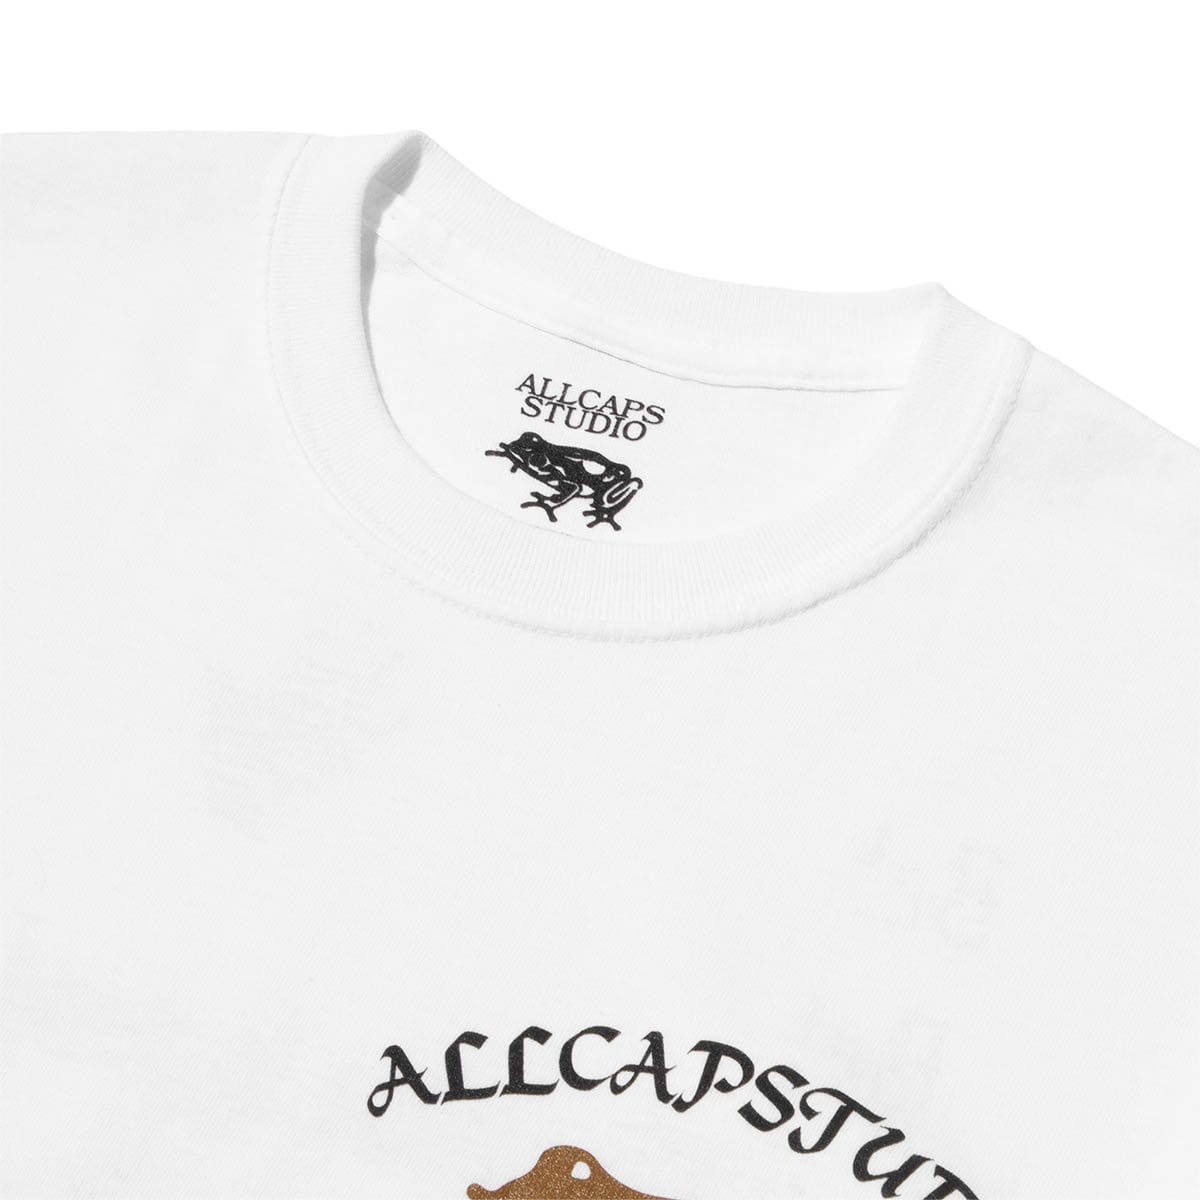 ALLCAPSTUDIO T-Shirts PRESENT MOMENT T-SHIRT